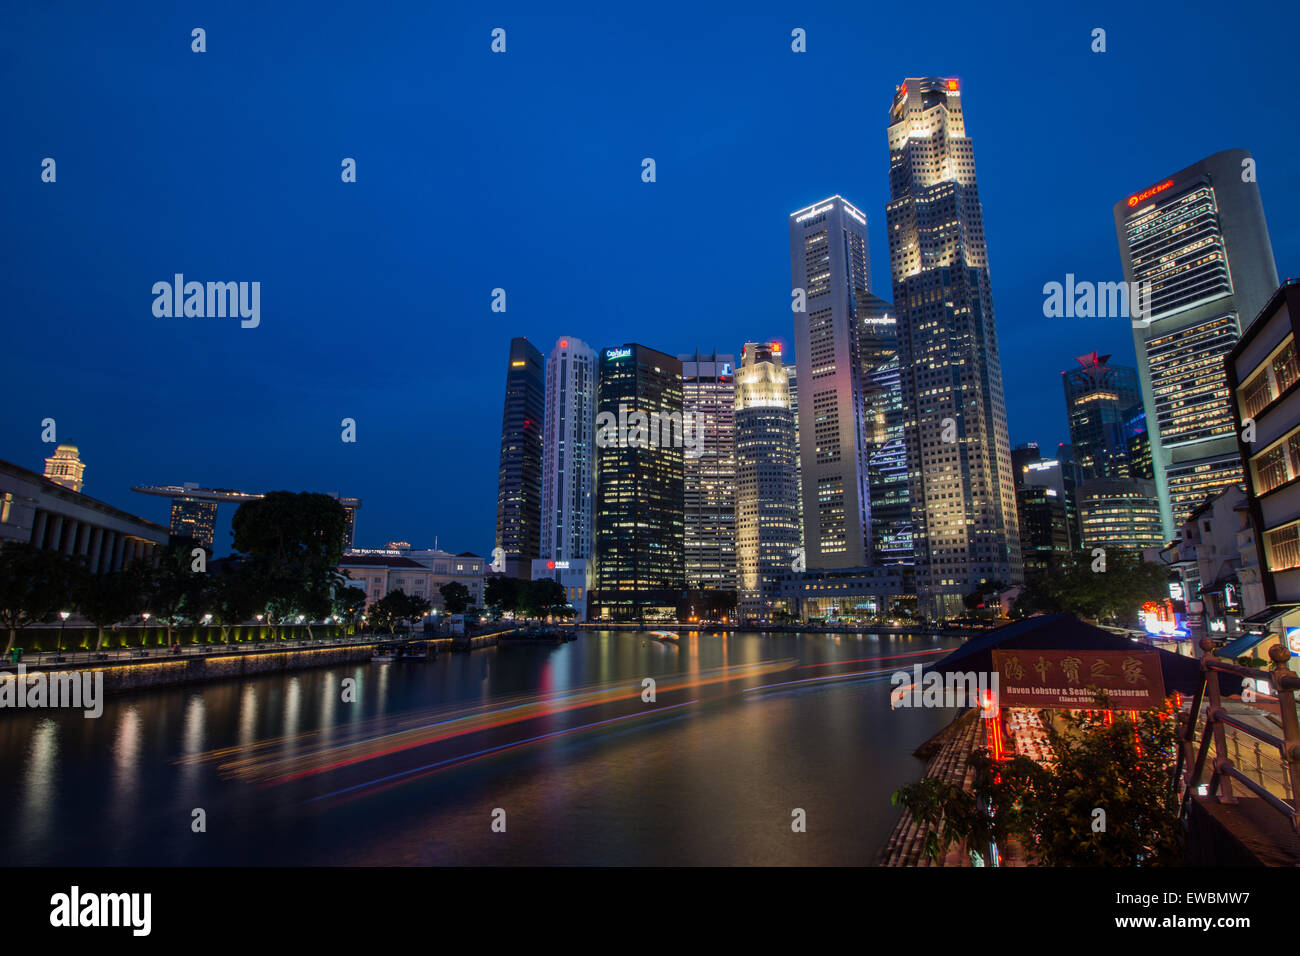 Singapore River Stockfoto